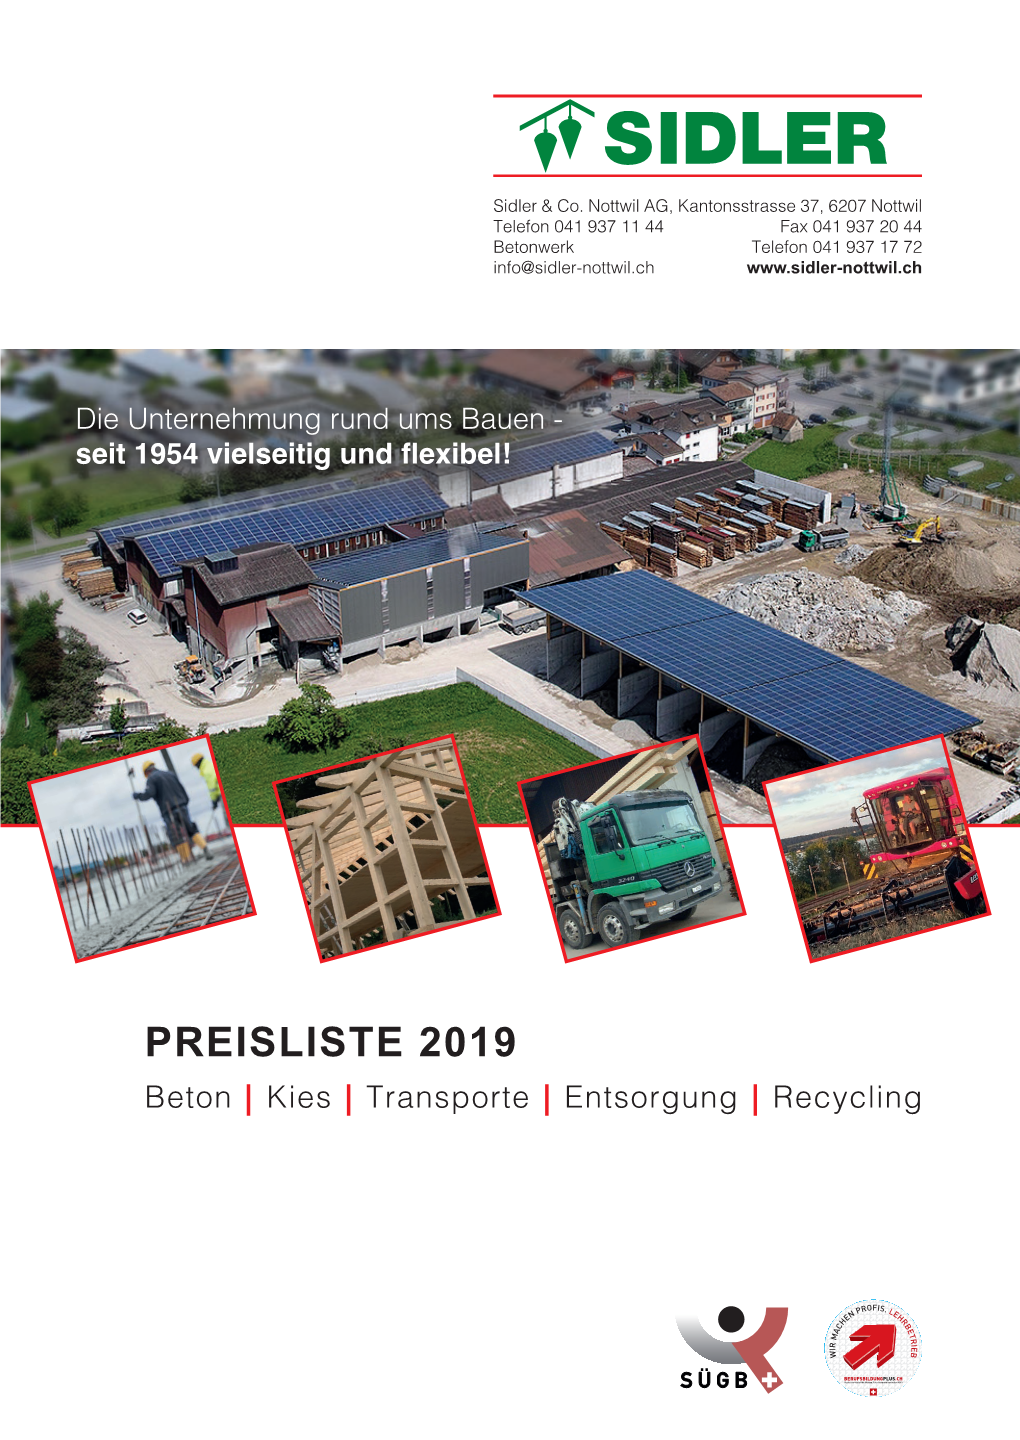 PREISLISTE 2019 Beton Kies Transporte Entsorgung Recycling